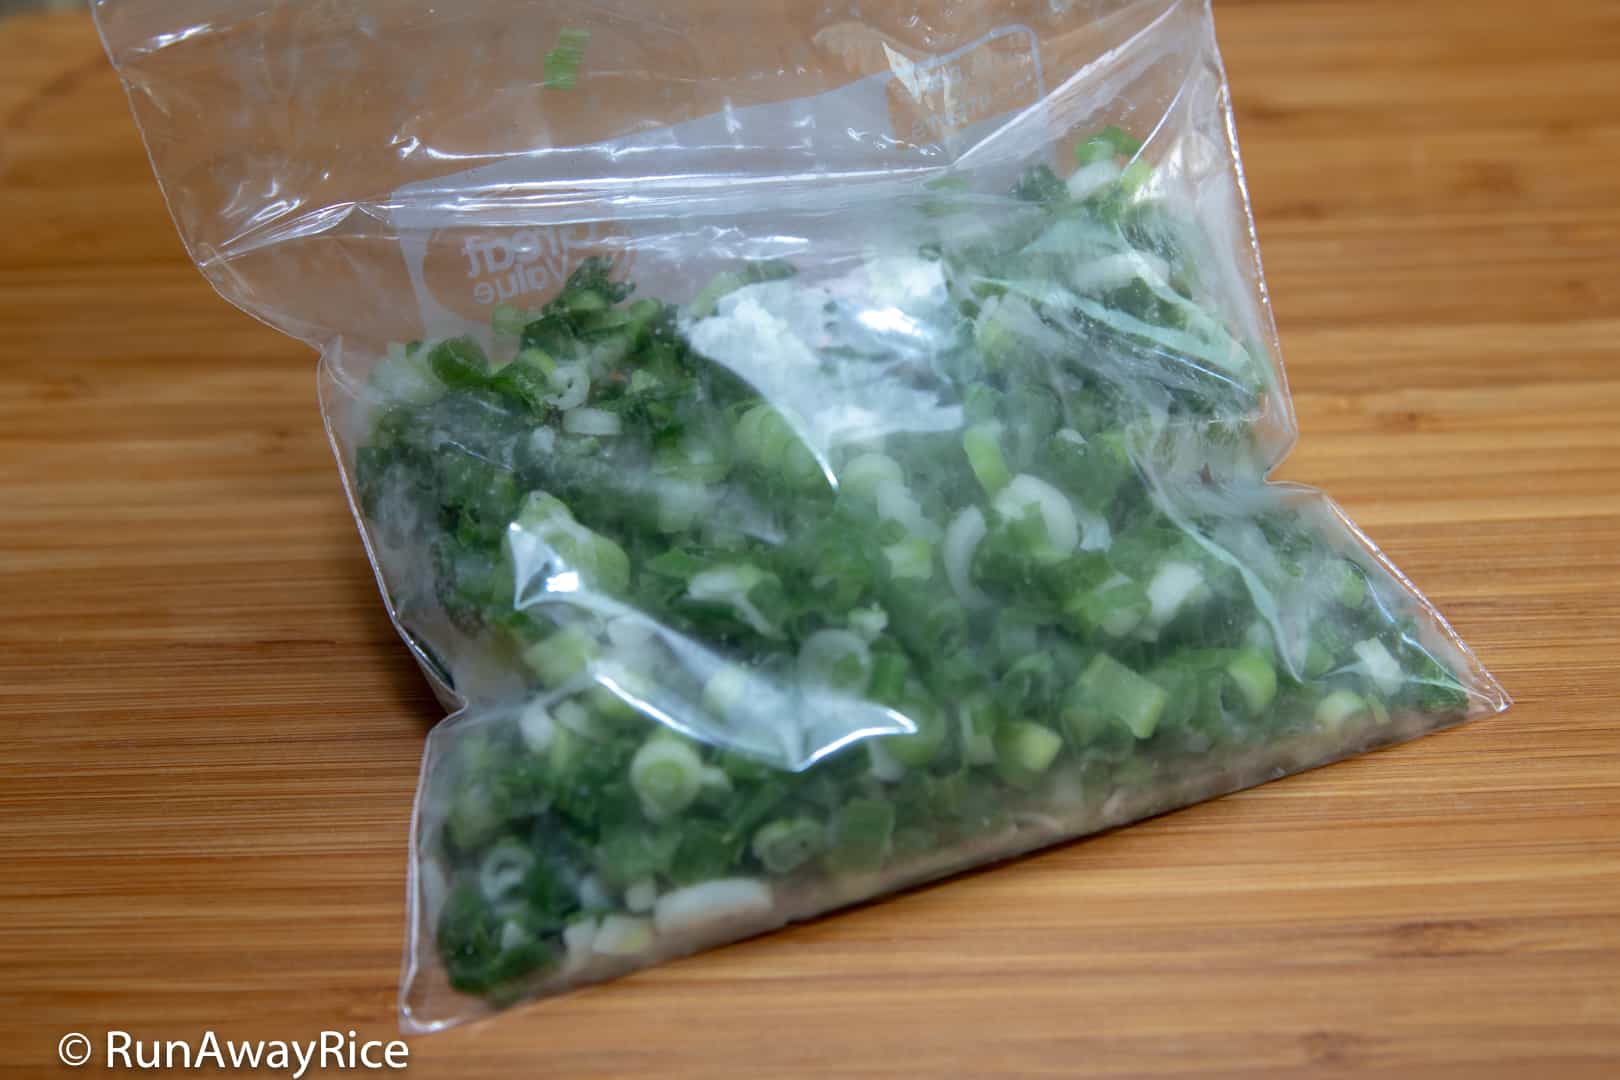 http://runawayrice.com/wp-content/uploads/2018/10/How-To-Freeze-Green-Onions-Frozen-in-Bag-.jpg